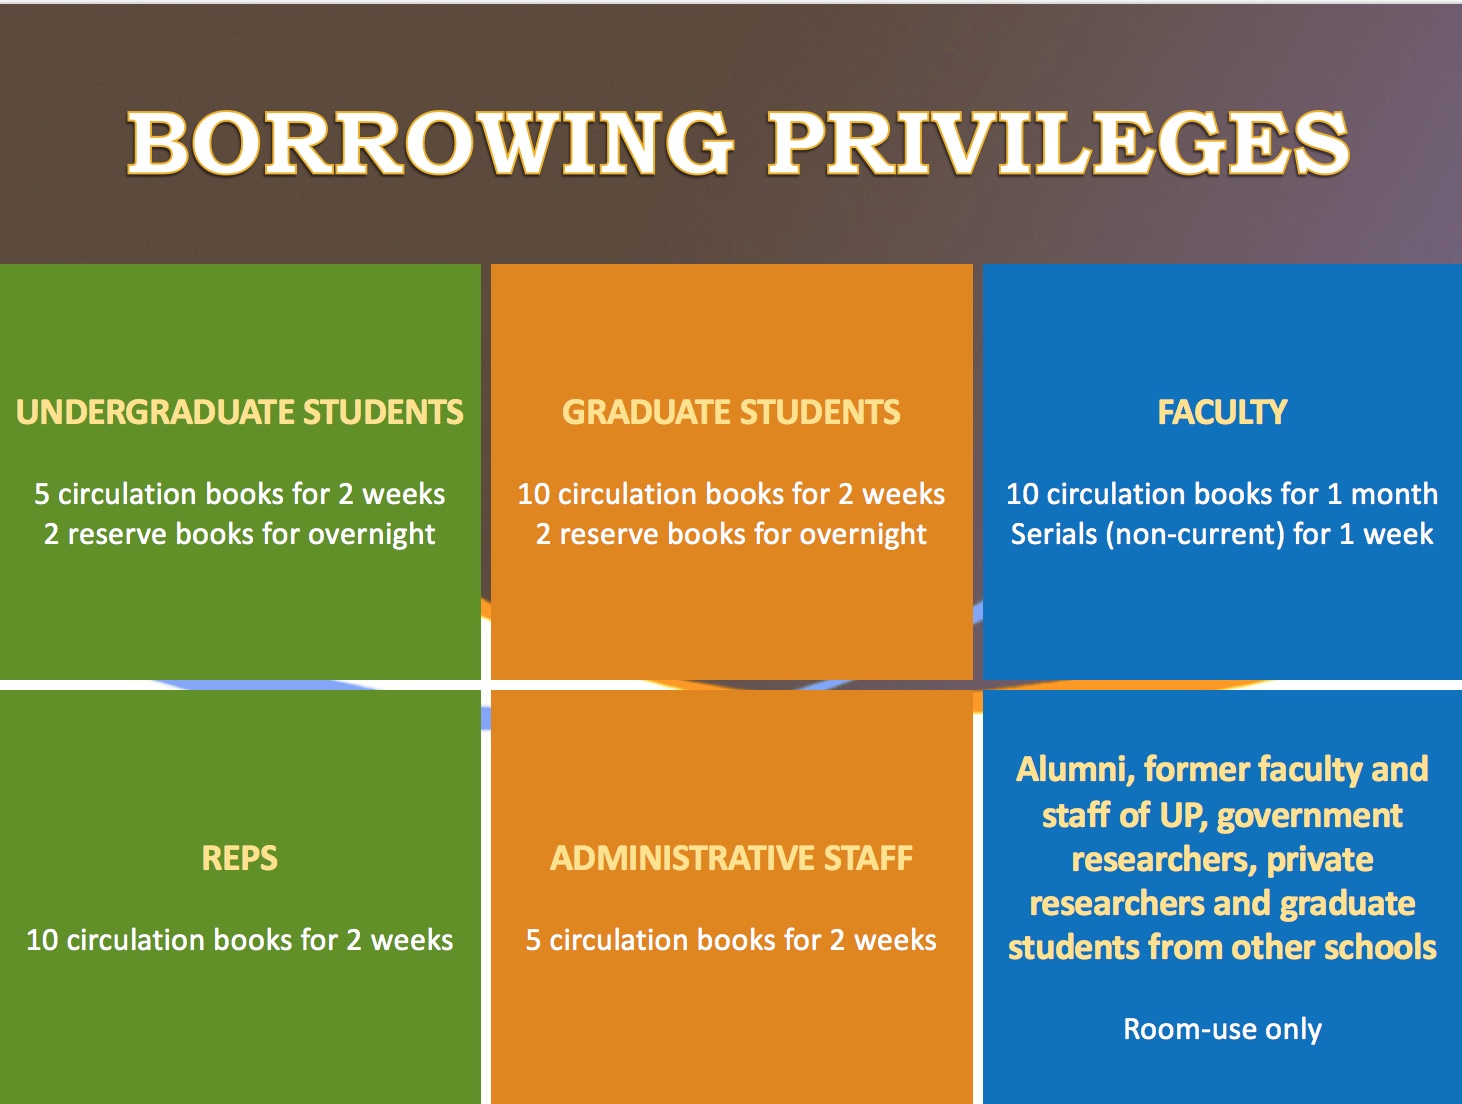 Borrowing privileges